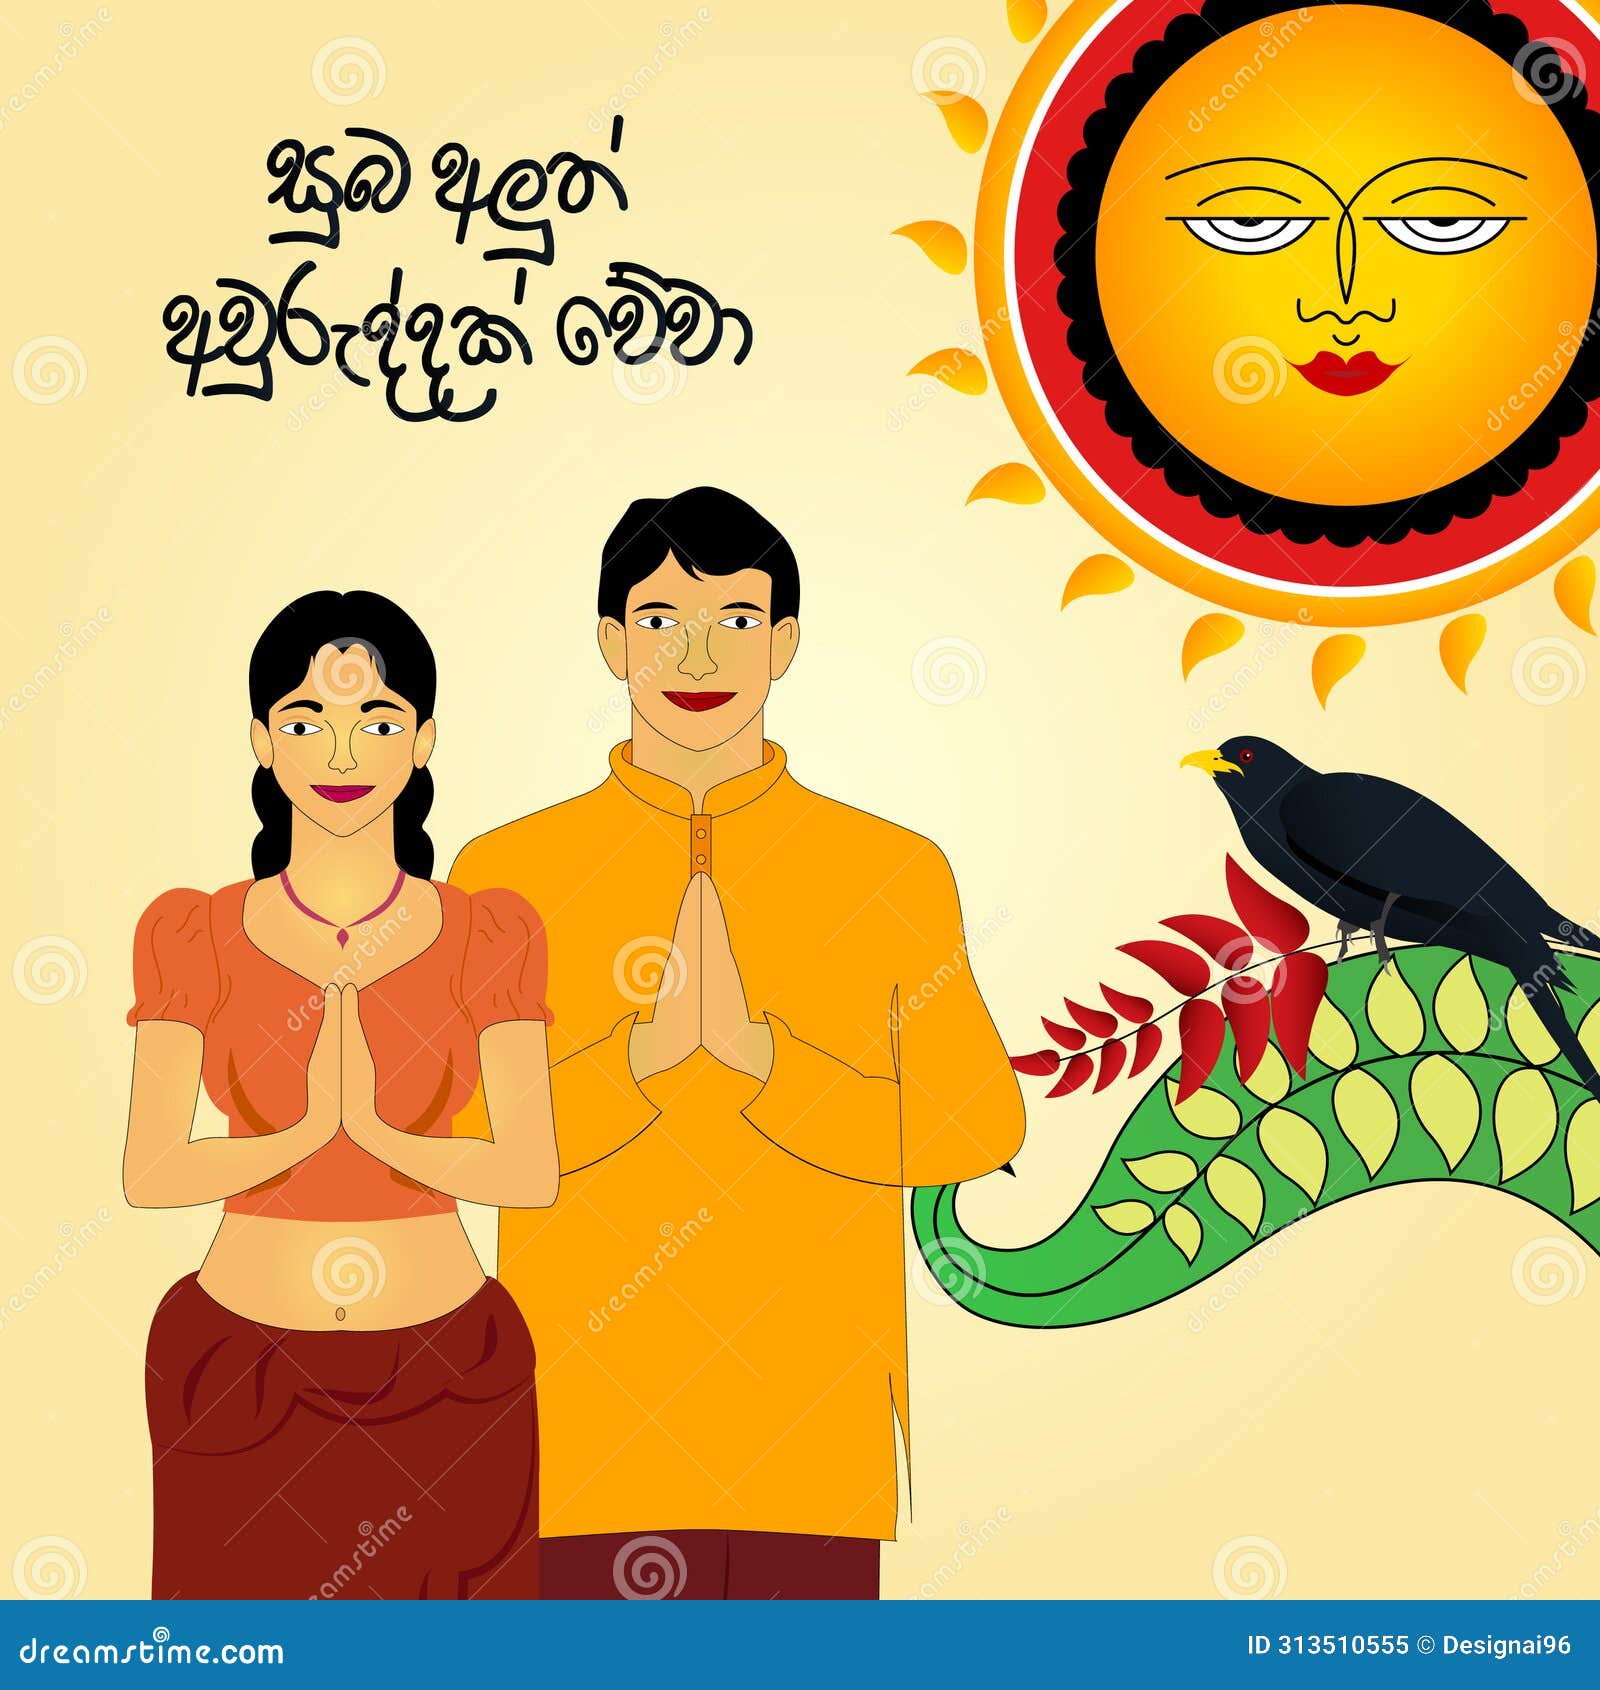 sinhala new year. sri lanka new year. sinhala and tamil new year 